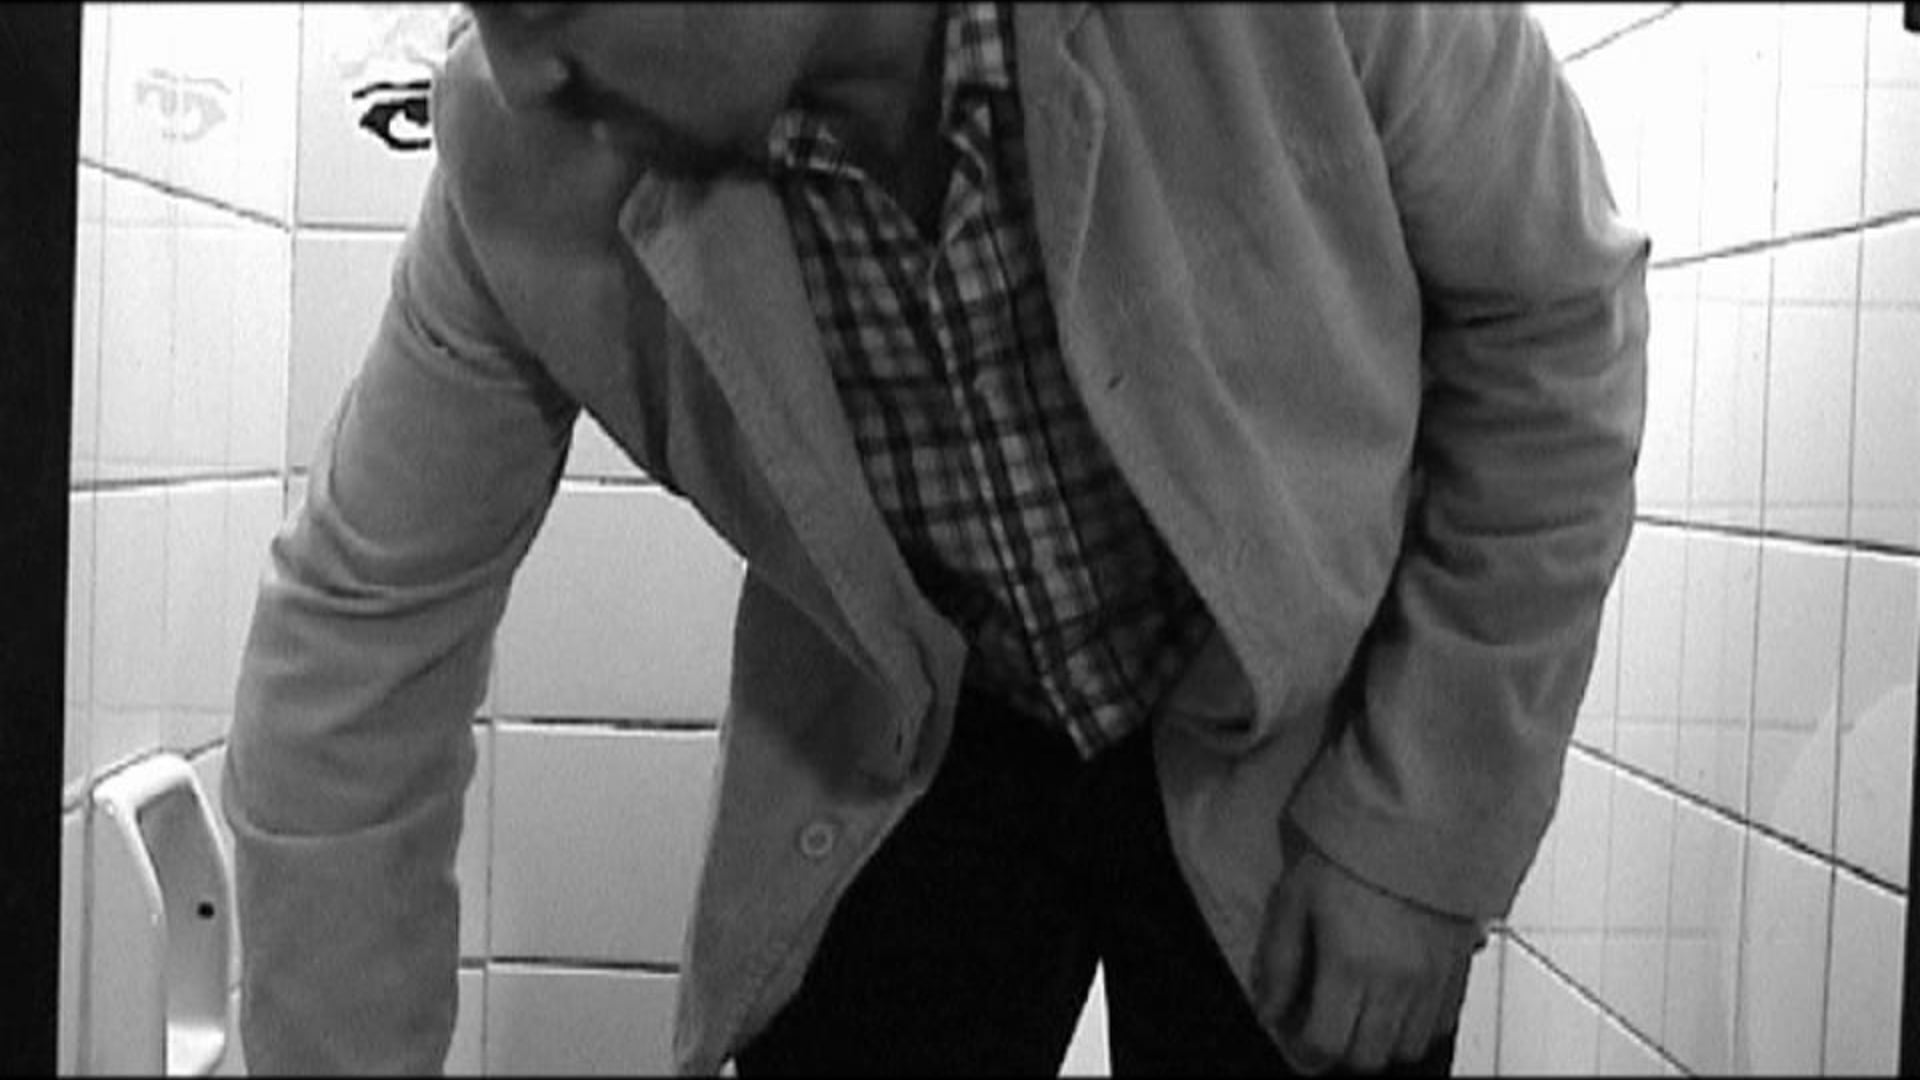 Espiando al Hombre - Cortometraje / Spying on the man - Short Film